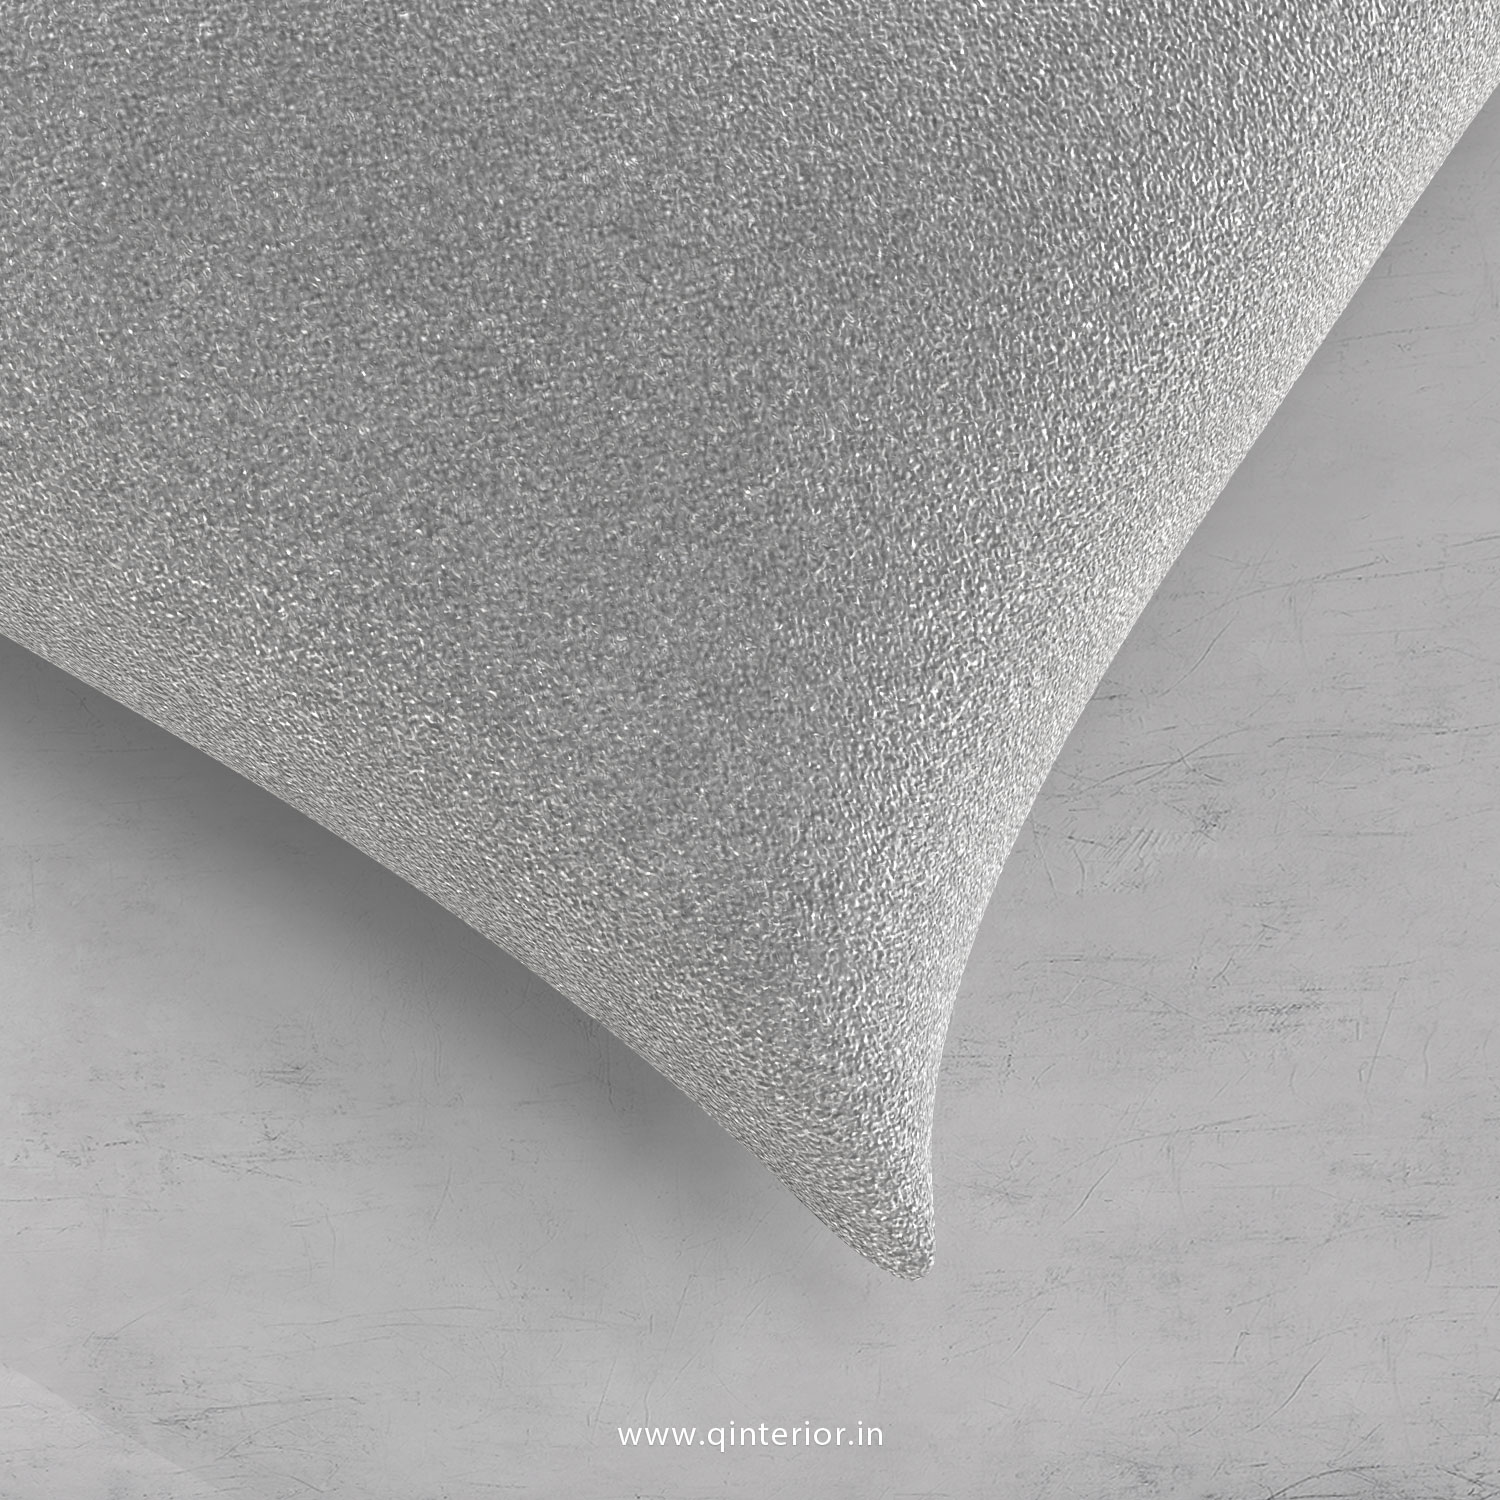 Cushion With Cushion Cover in Velvet Fabric - CUS002 VL06